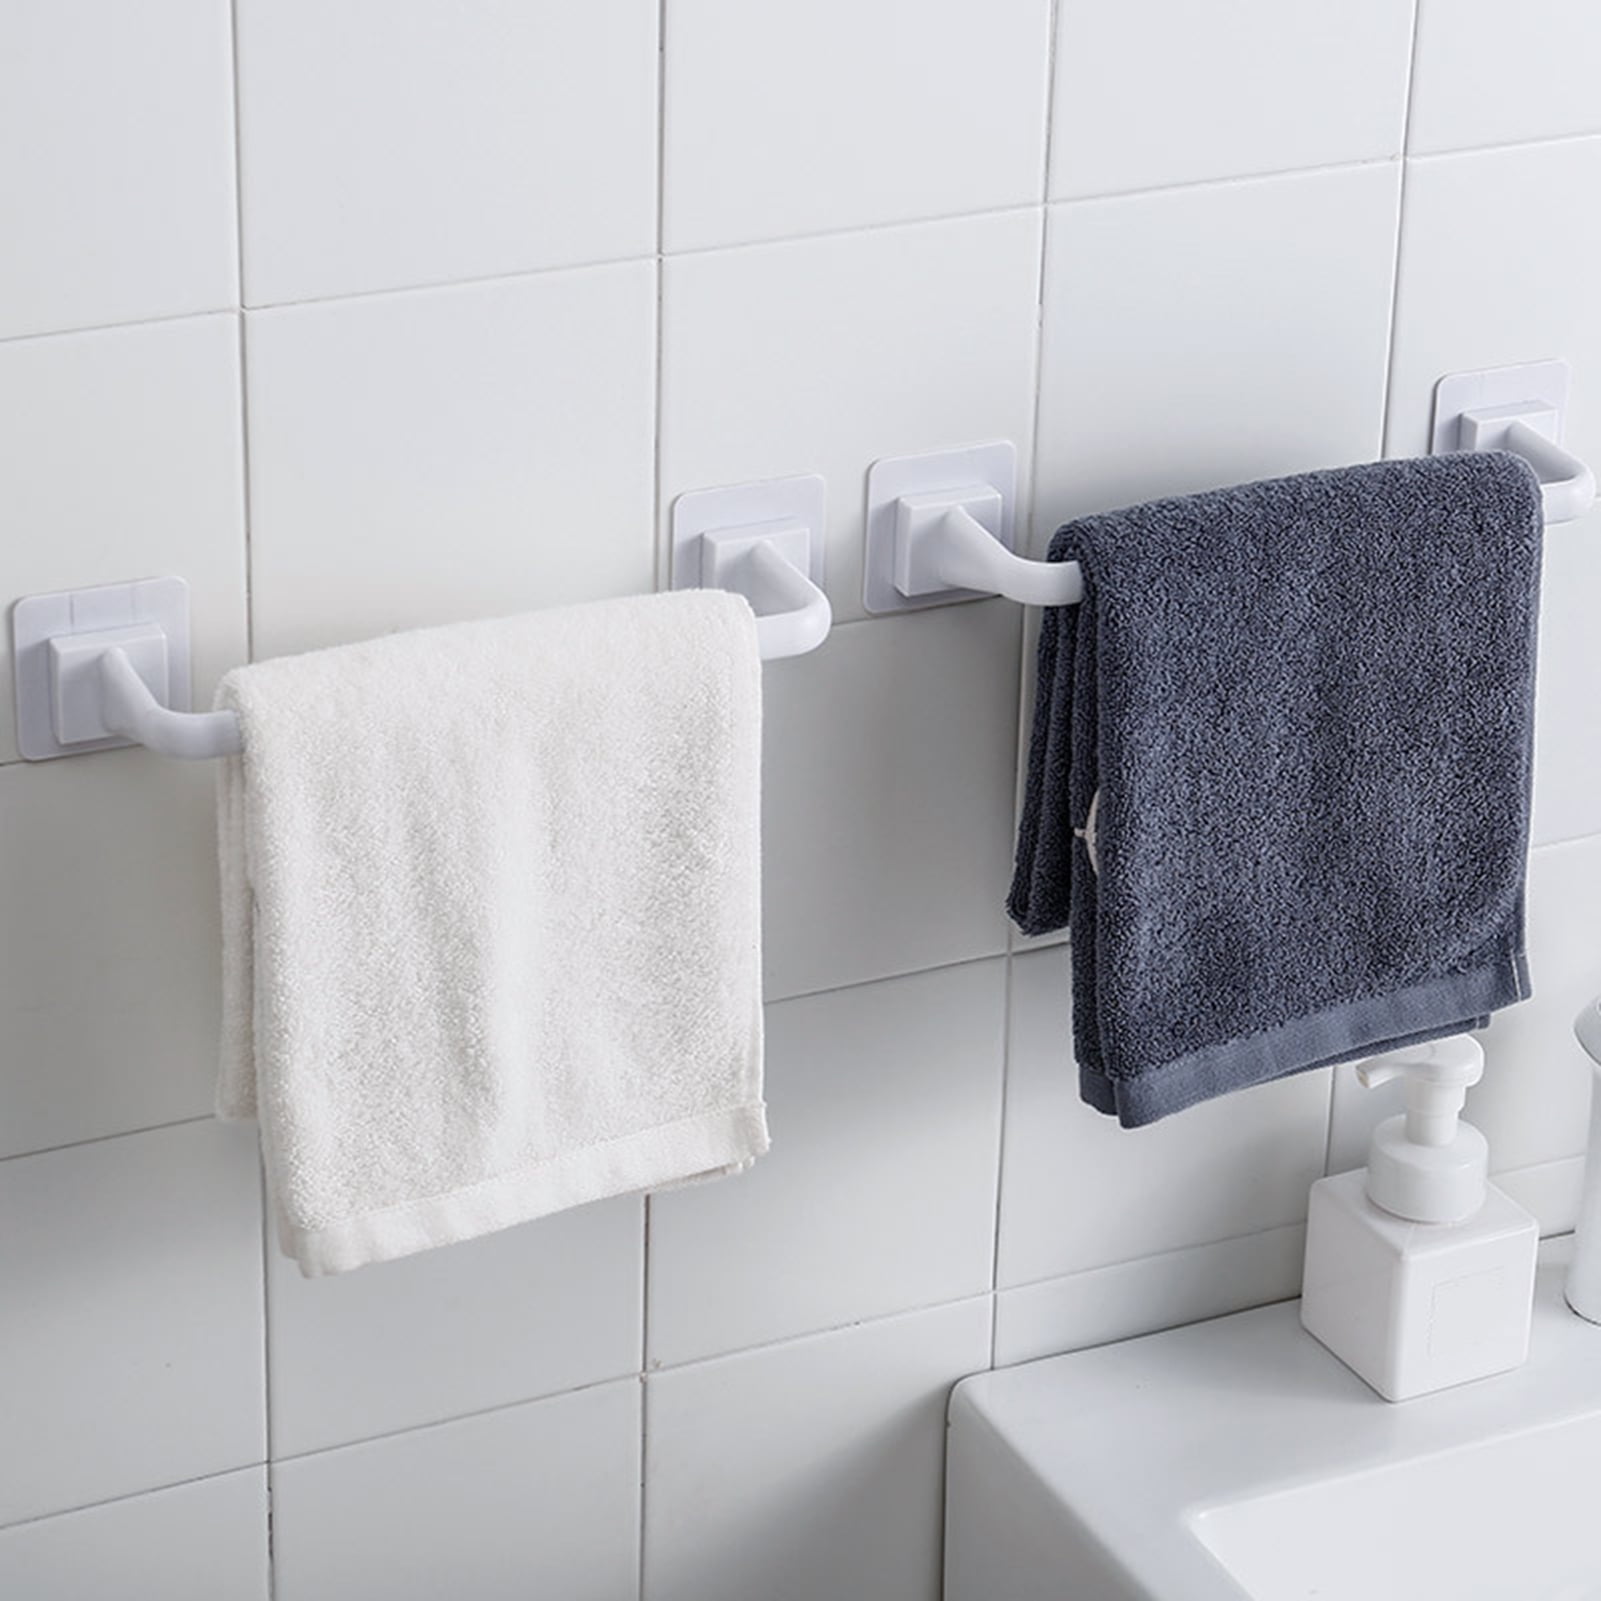 Floridivy Self Adhesive Towel Rod Towel Bar Stick on towel rack,Adhesive towel stick,Adhesive Wall Bath Towel Holder Rail Rack Kitchen Bathroom